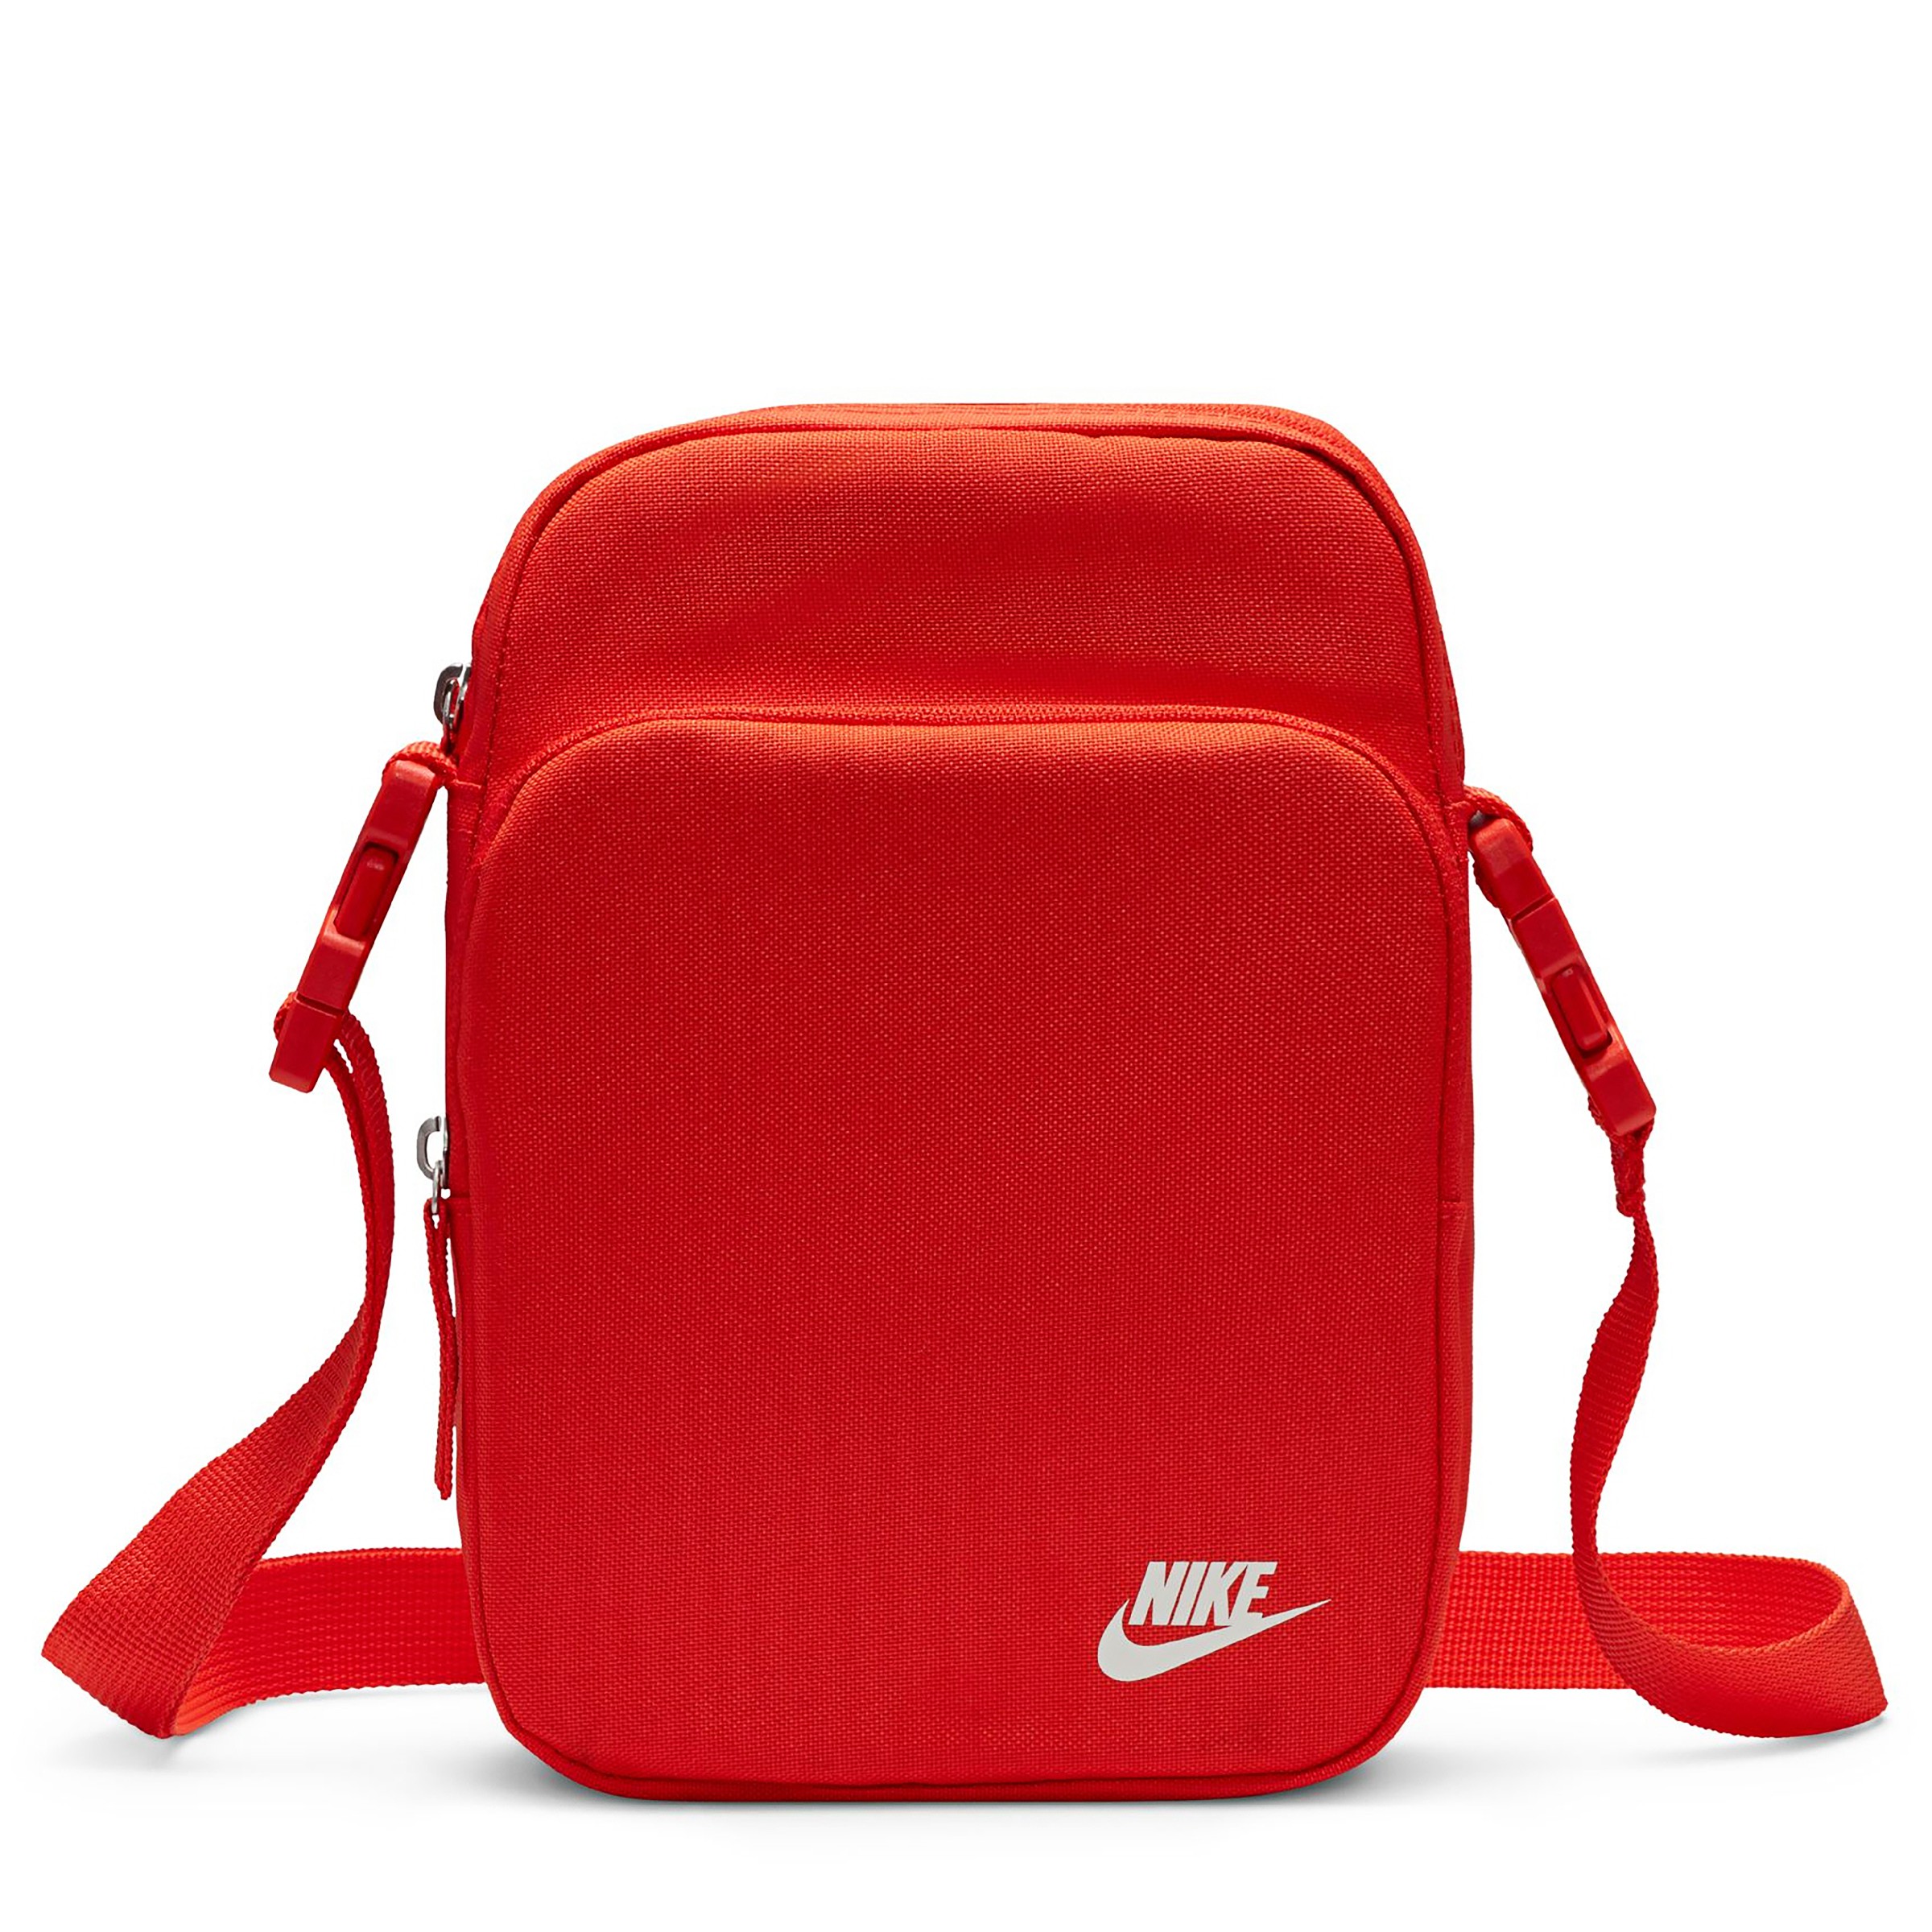 Nike Body Bag Price Philippines | lupon.gov.ph